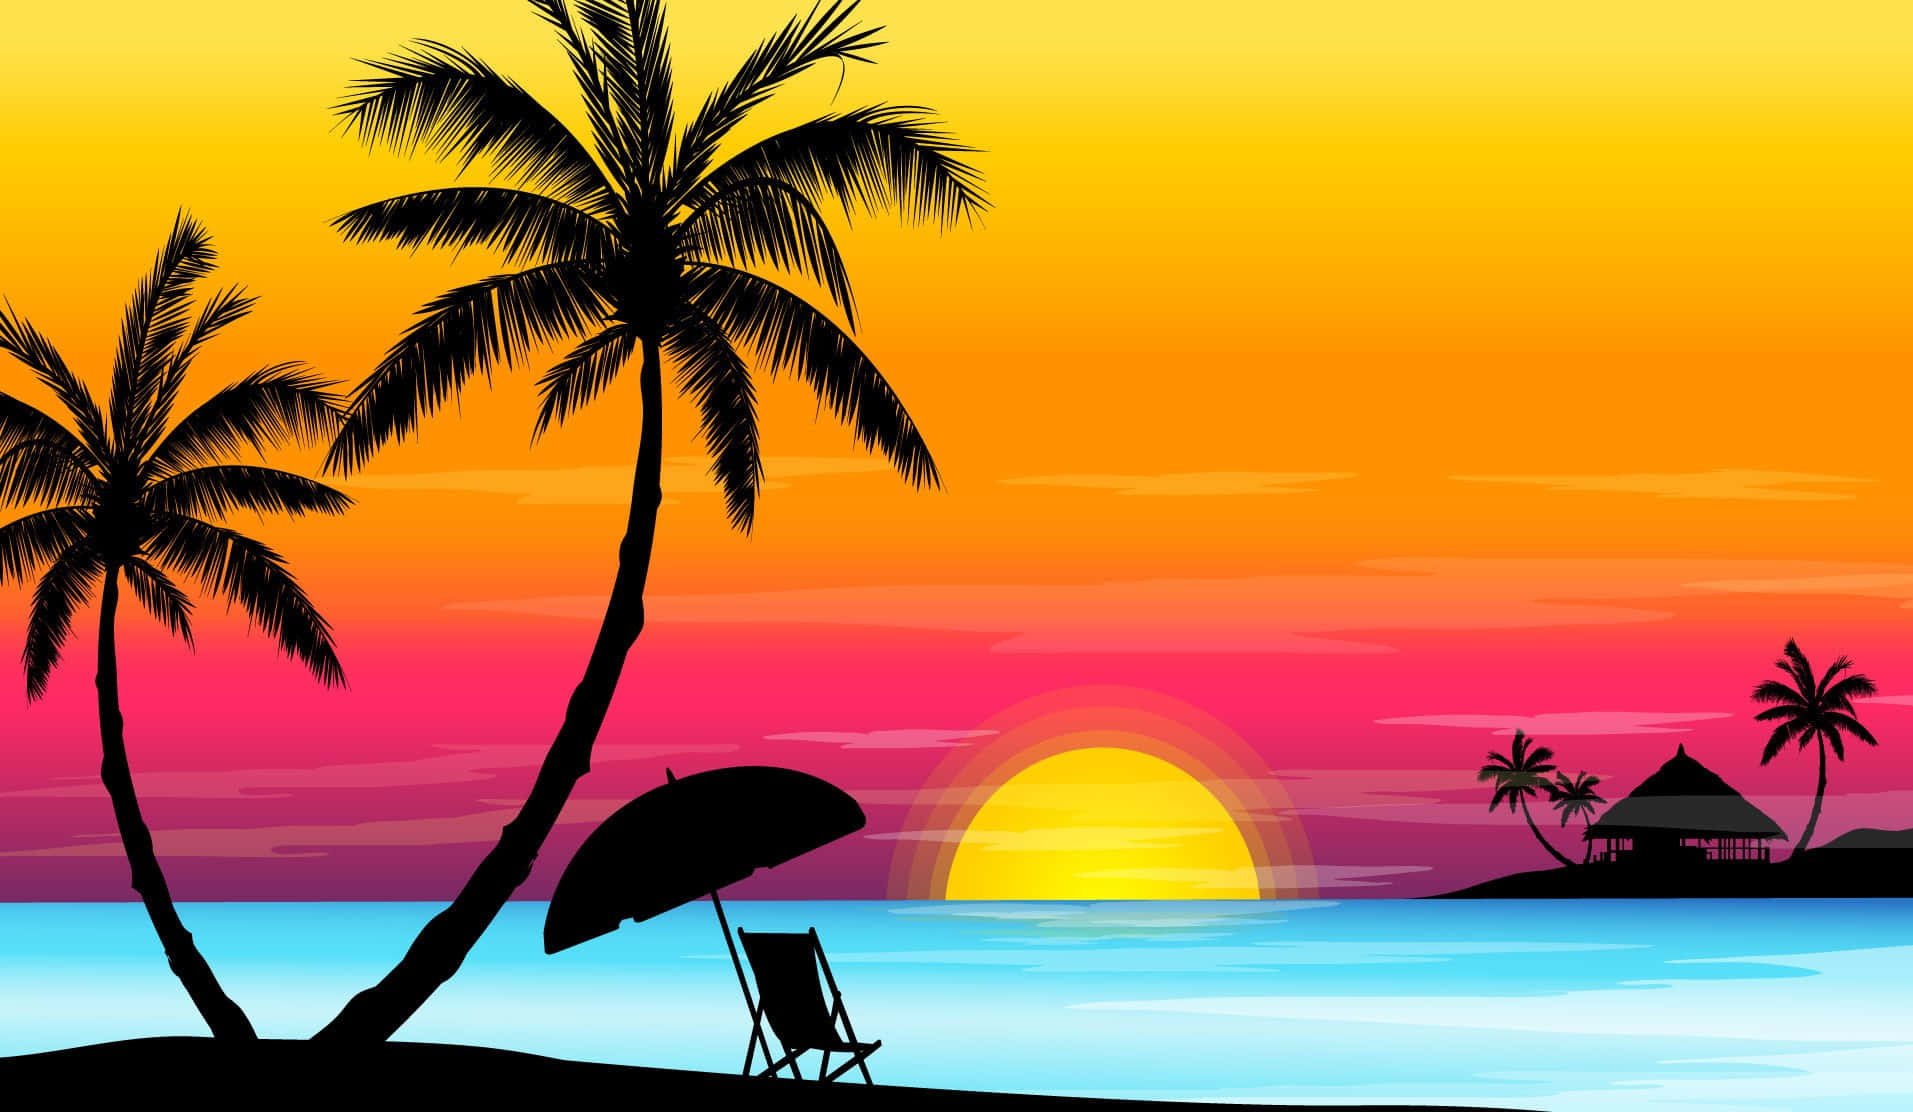 Image  "A romantic beach sunset creates a dreamy atmosphere"